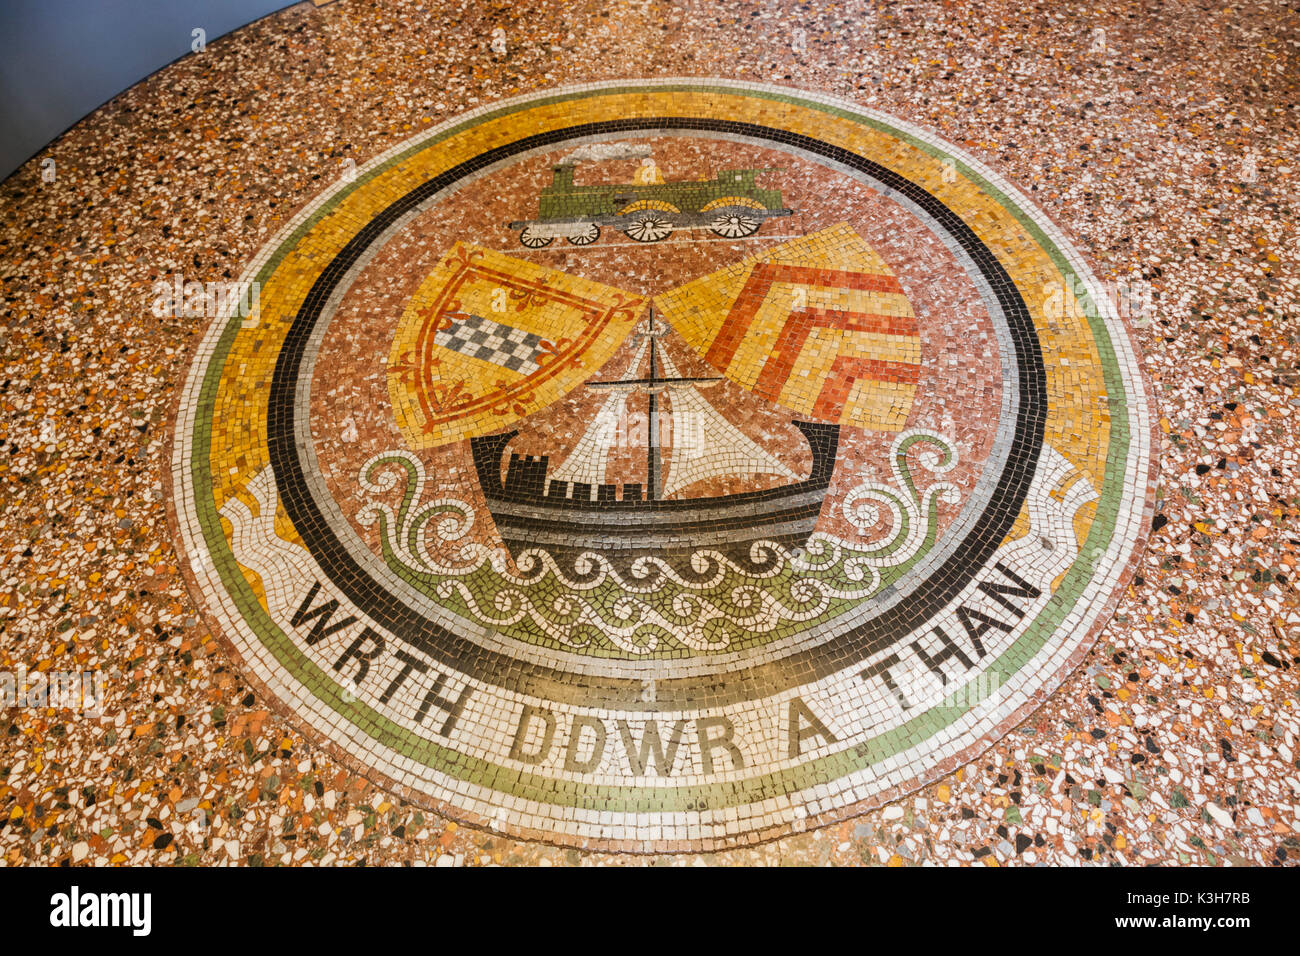 Wales, Cardiff, Cardiff Bay, pierhead Building, Eingangshalle Bodenbeläge Mosaik Stockfoto